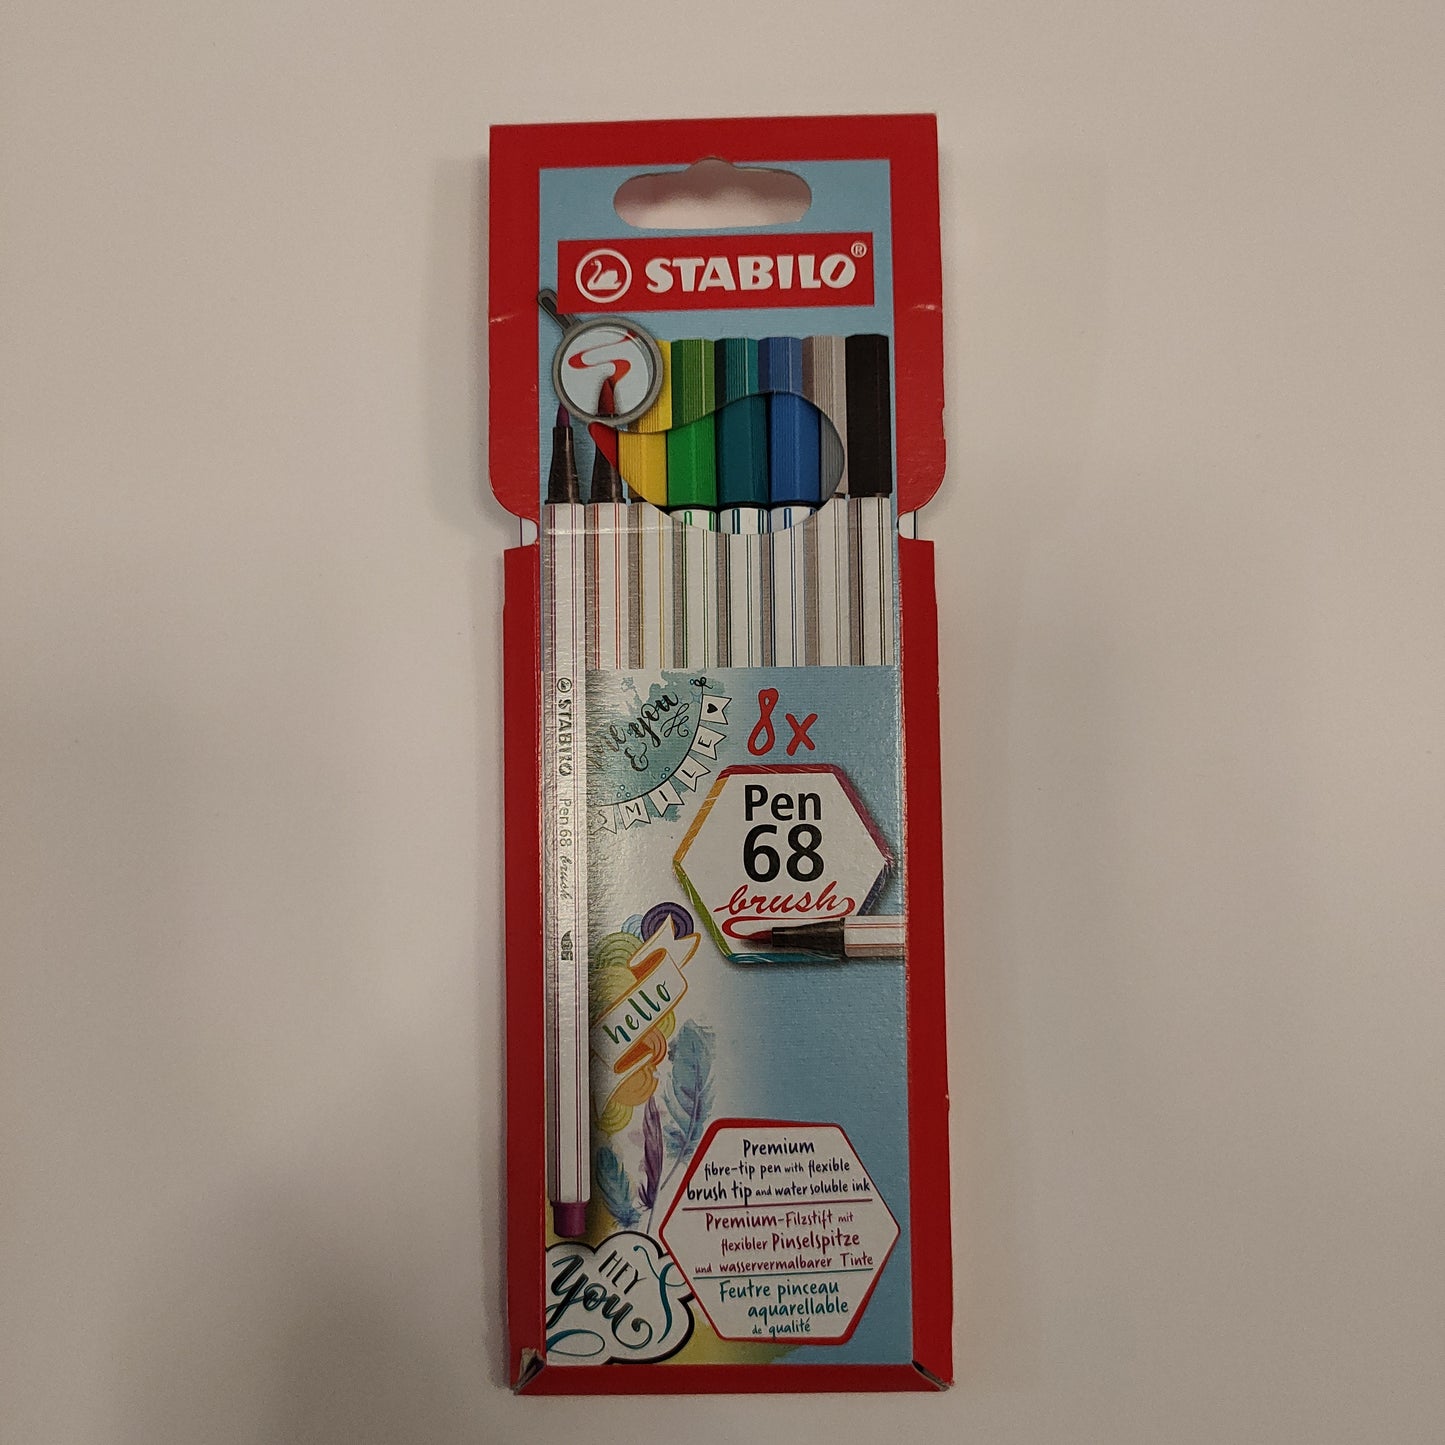 Stabilo set 8 Pen 68 Brush